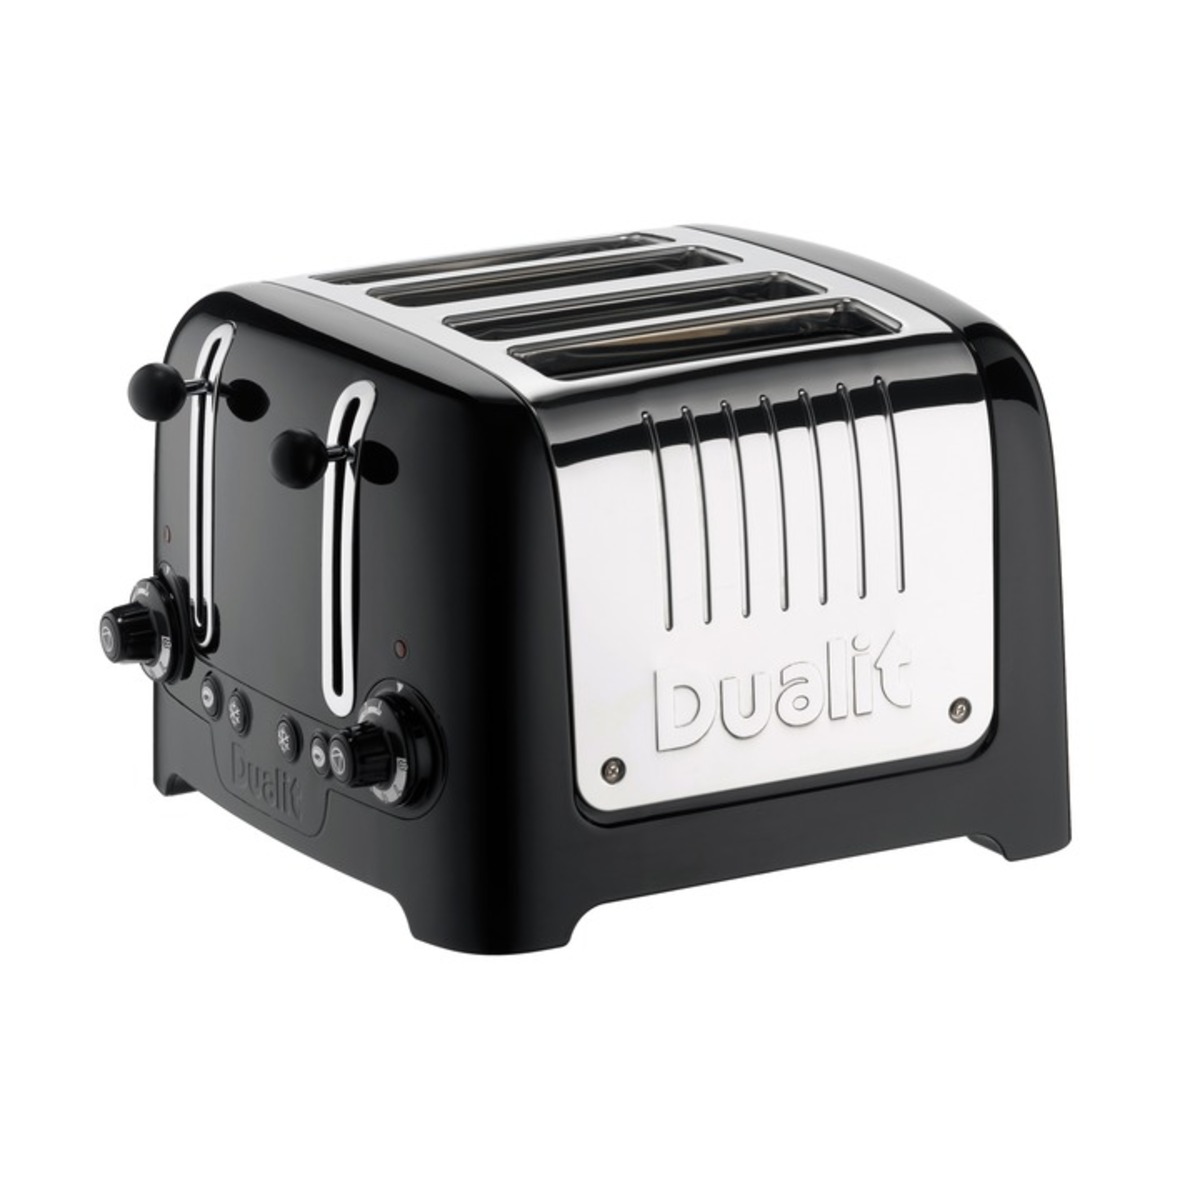 Dualit 46205 4 Slot Lite Toaster, Black Gloss